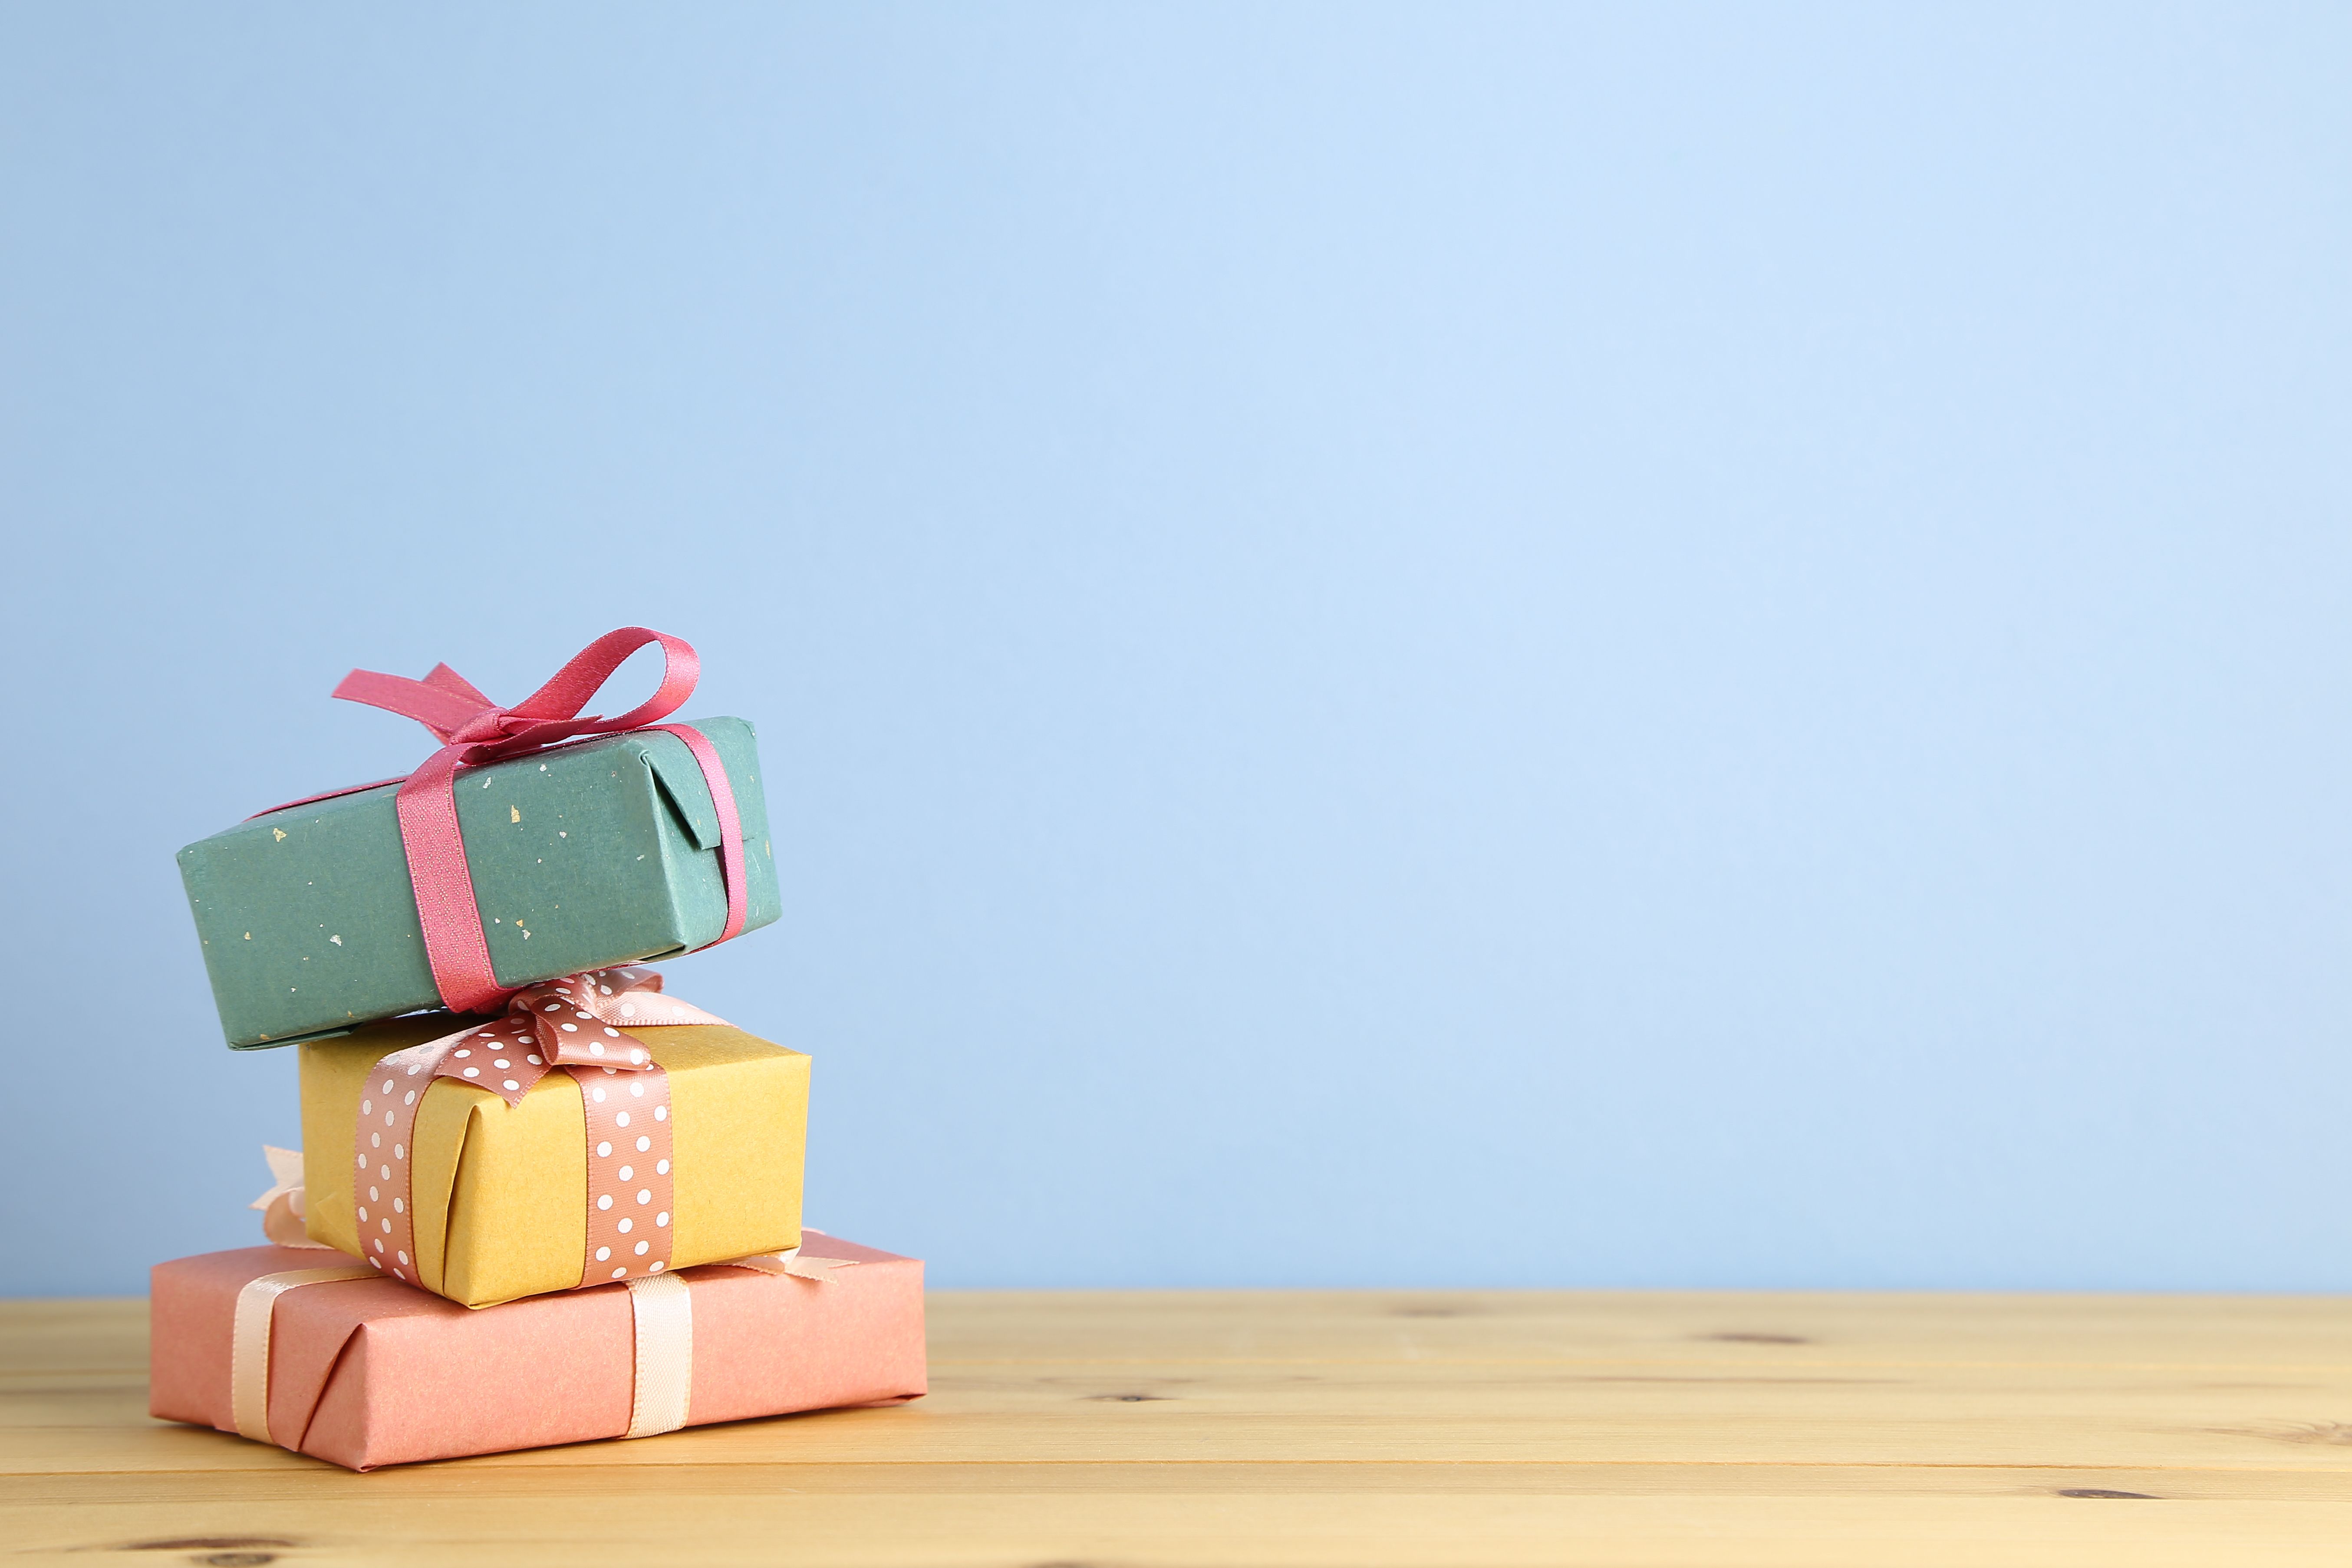 Sweet 16 Gift Ideas: 32 Creative Birthday Presents They'll Love